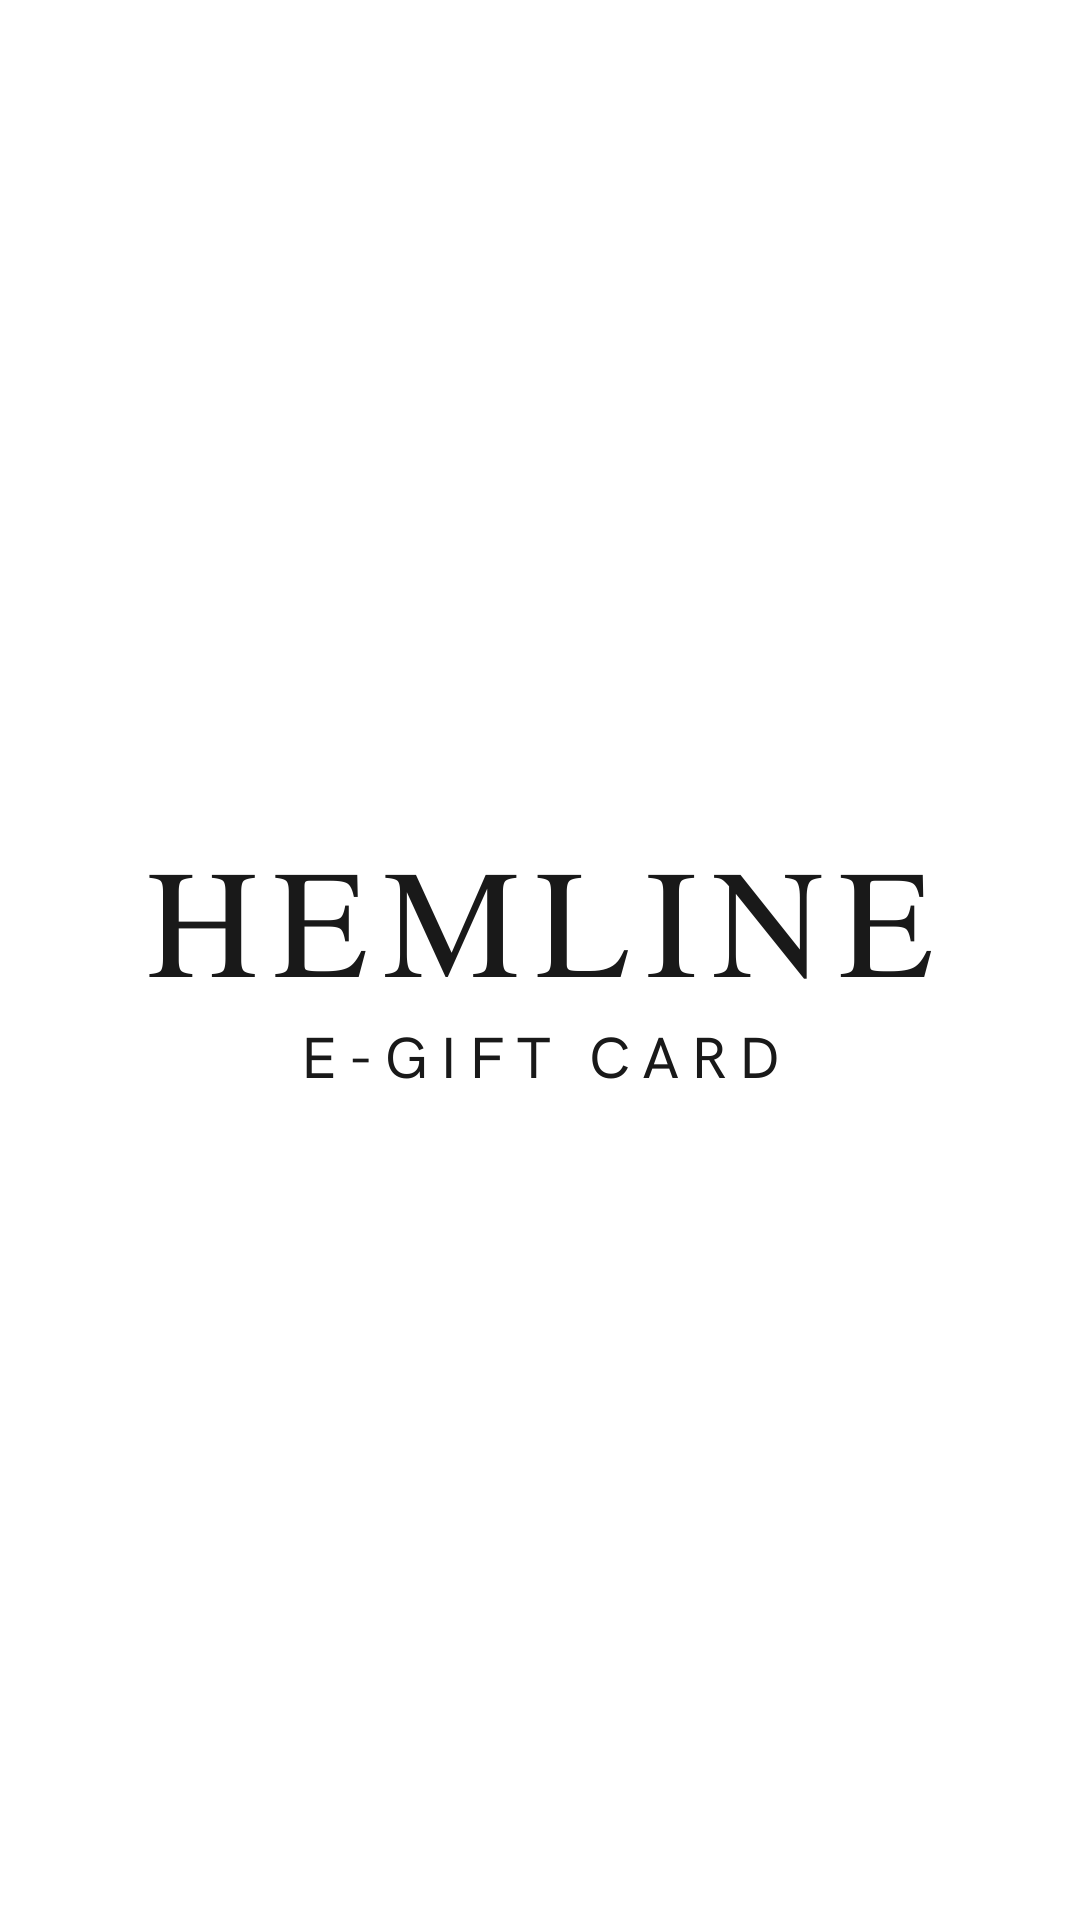 Hemline CityCentre E-Gift Card